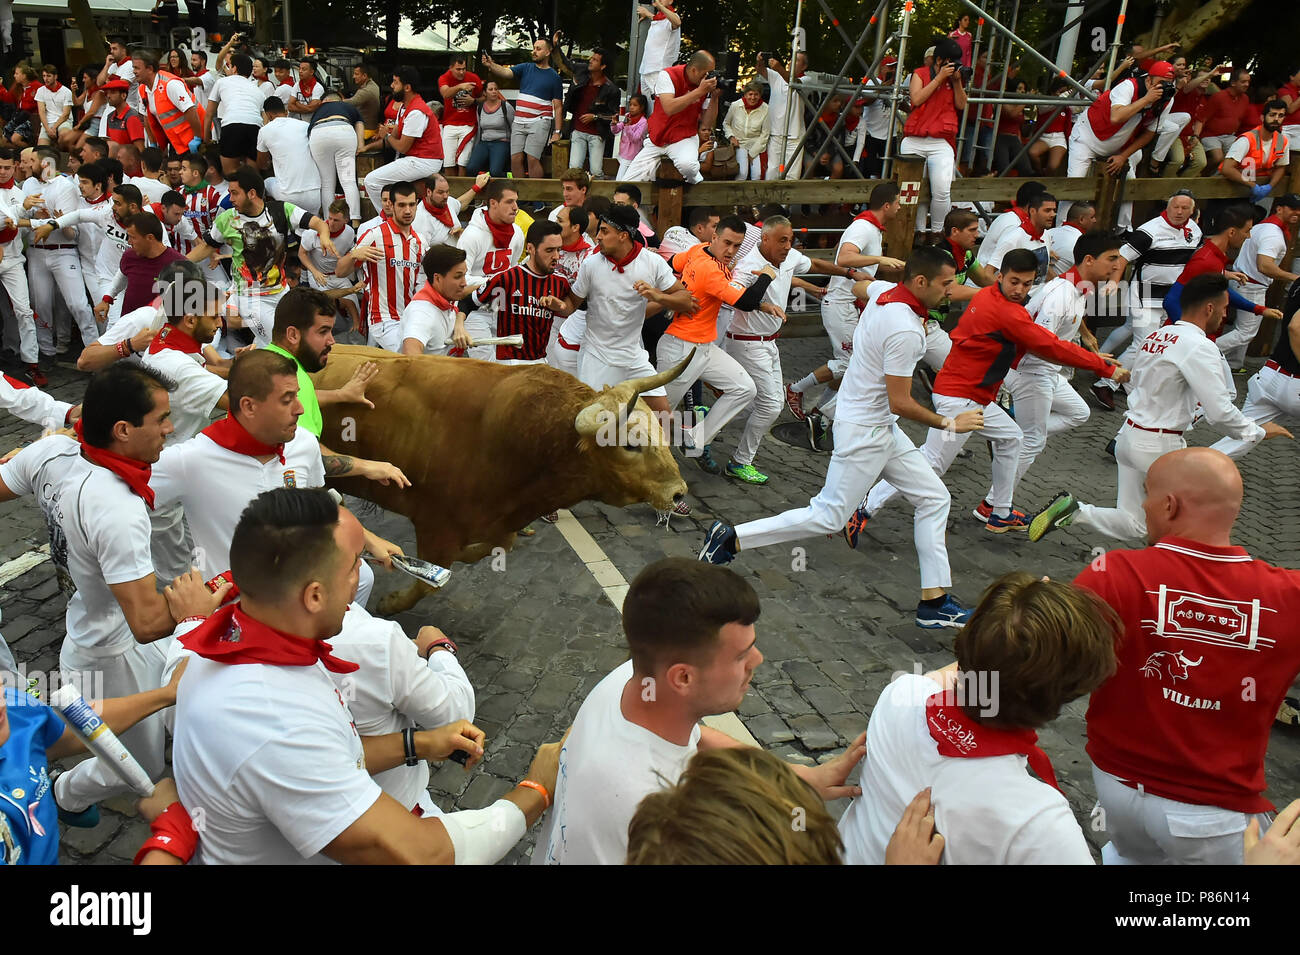 Participants run ahead of Fuente Ymbro´s fighting bulls on the fourth day  of the San Fermin bull run festival in Pamplona, Spain on July 10, 2018.  Cuarto encierro en las Fiestas de